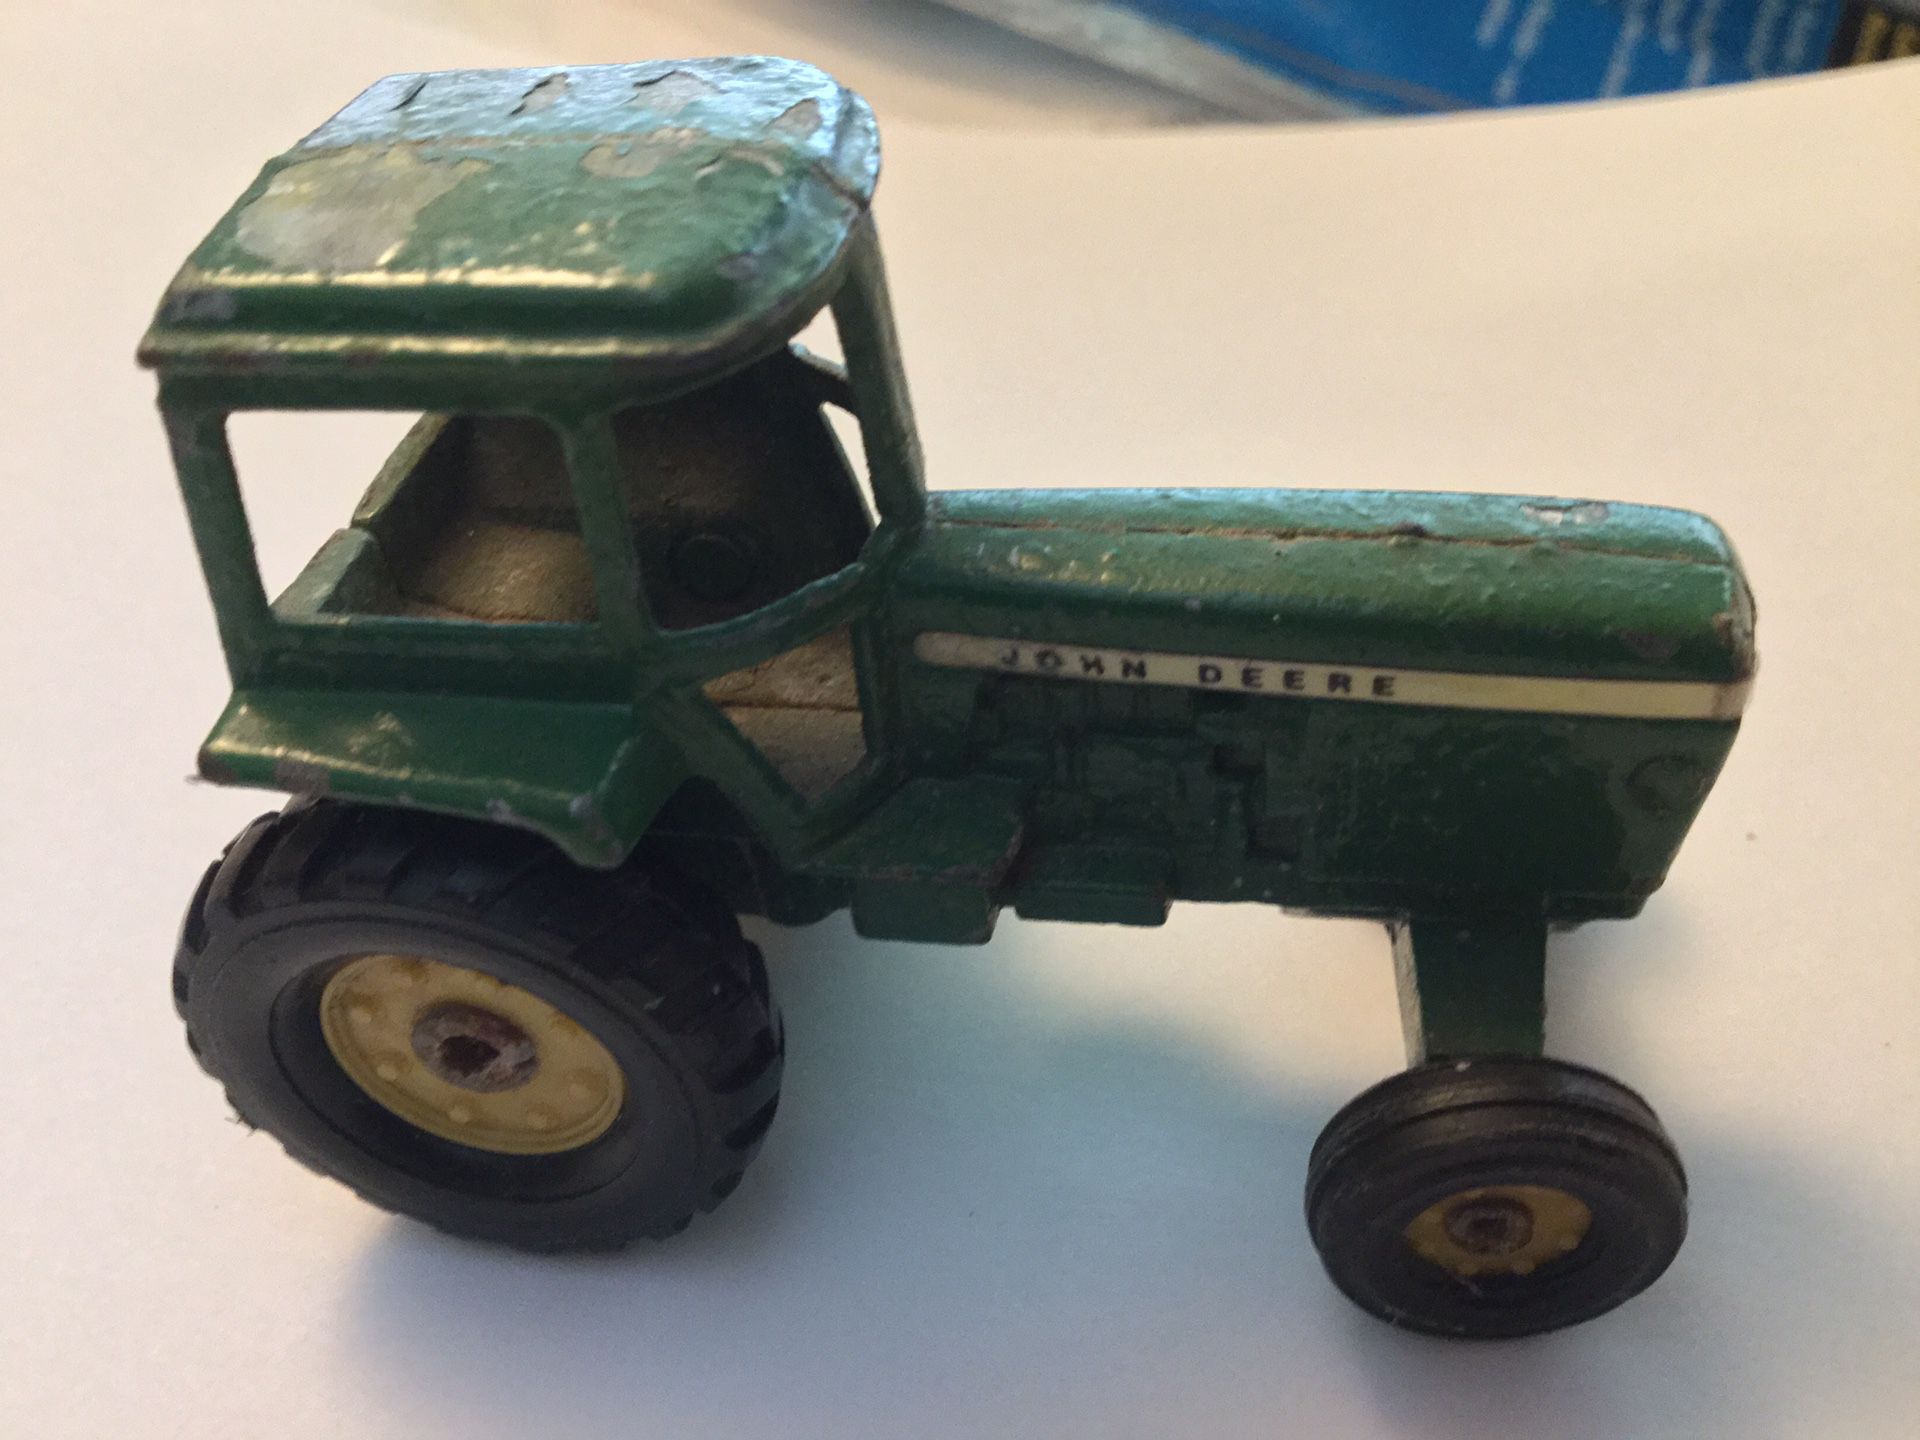 Vintage collectible John Deere tractor toy